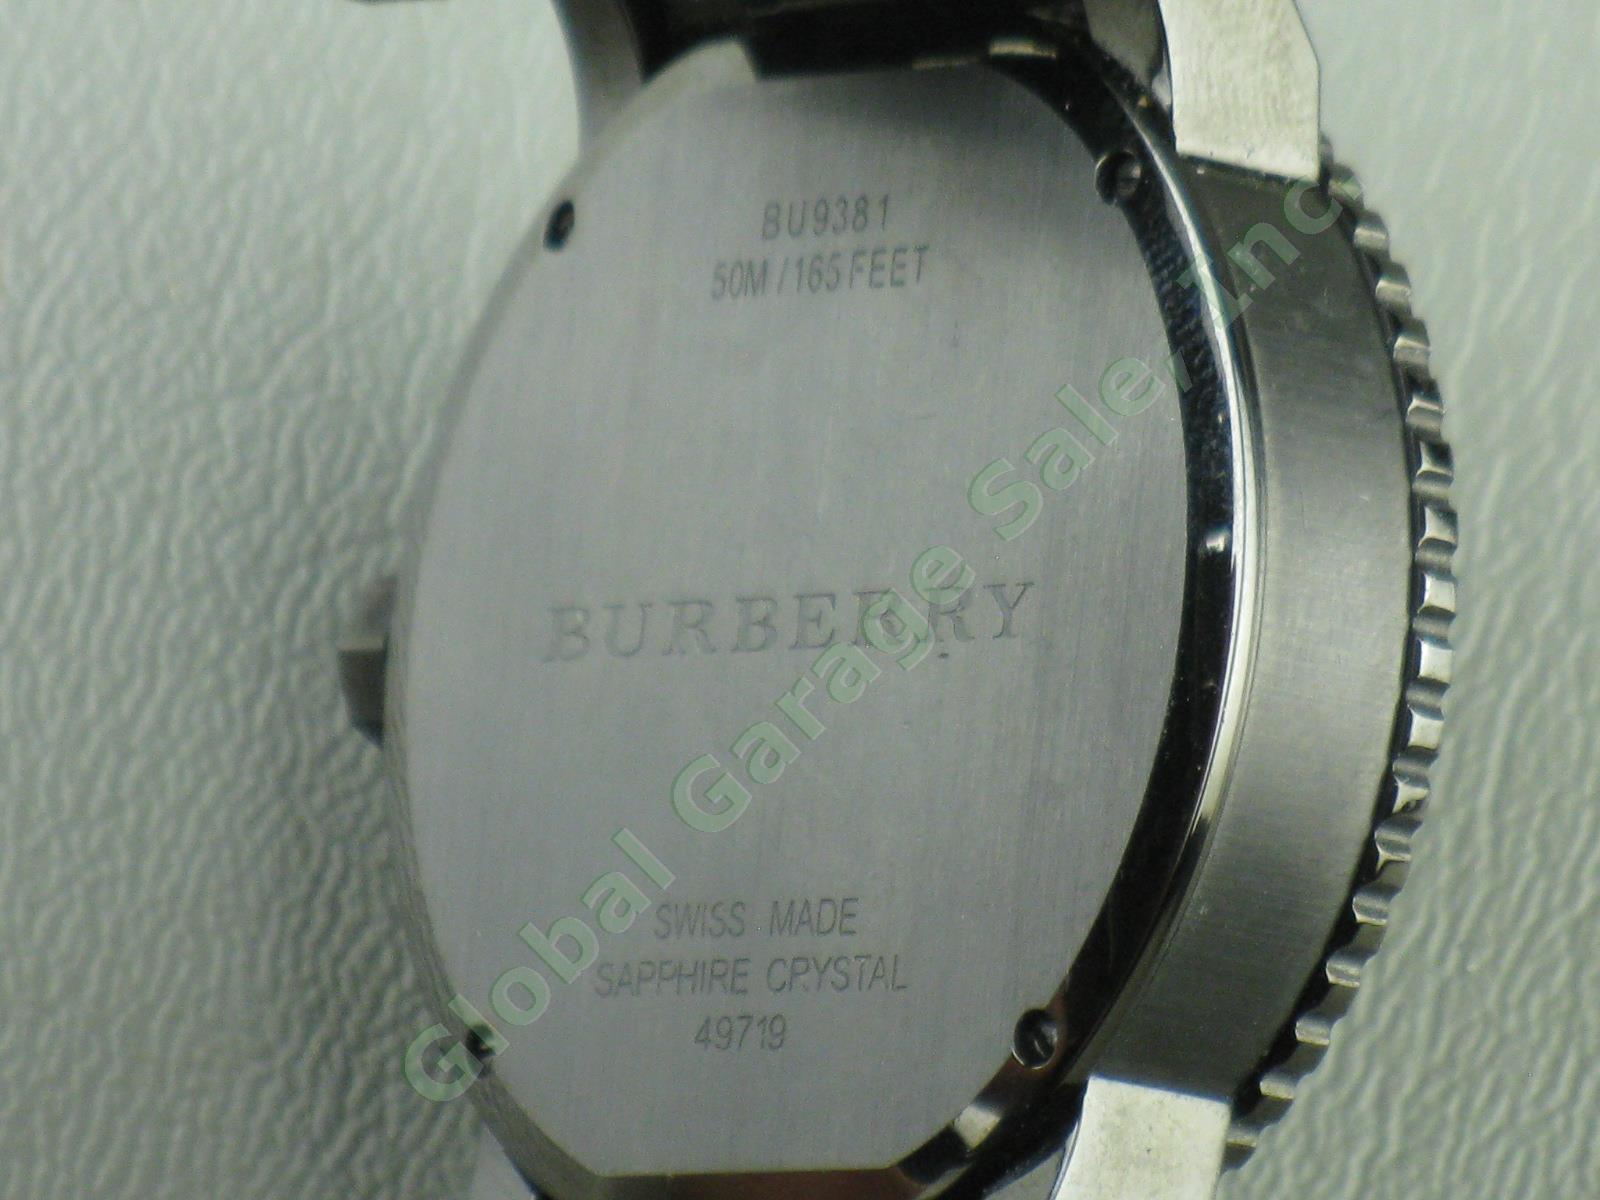 Mens Burberry BU9381 Gunmetal Black Stainless Steel Chronograph Watch No Reserve 5